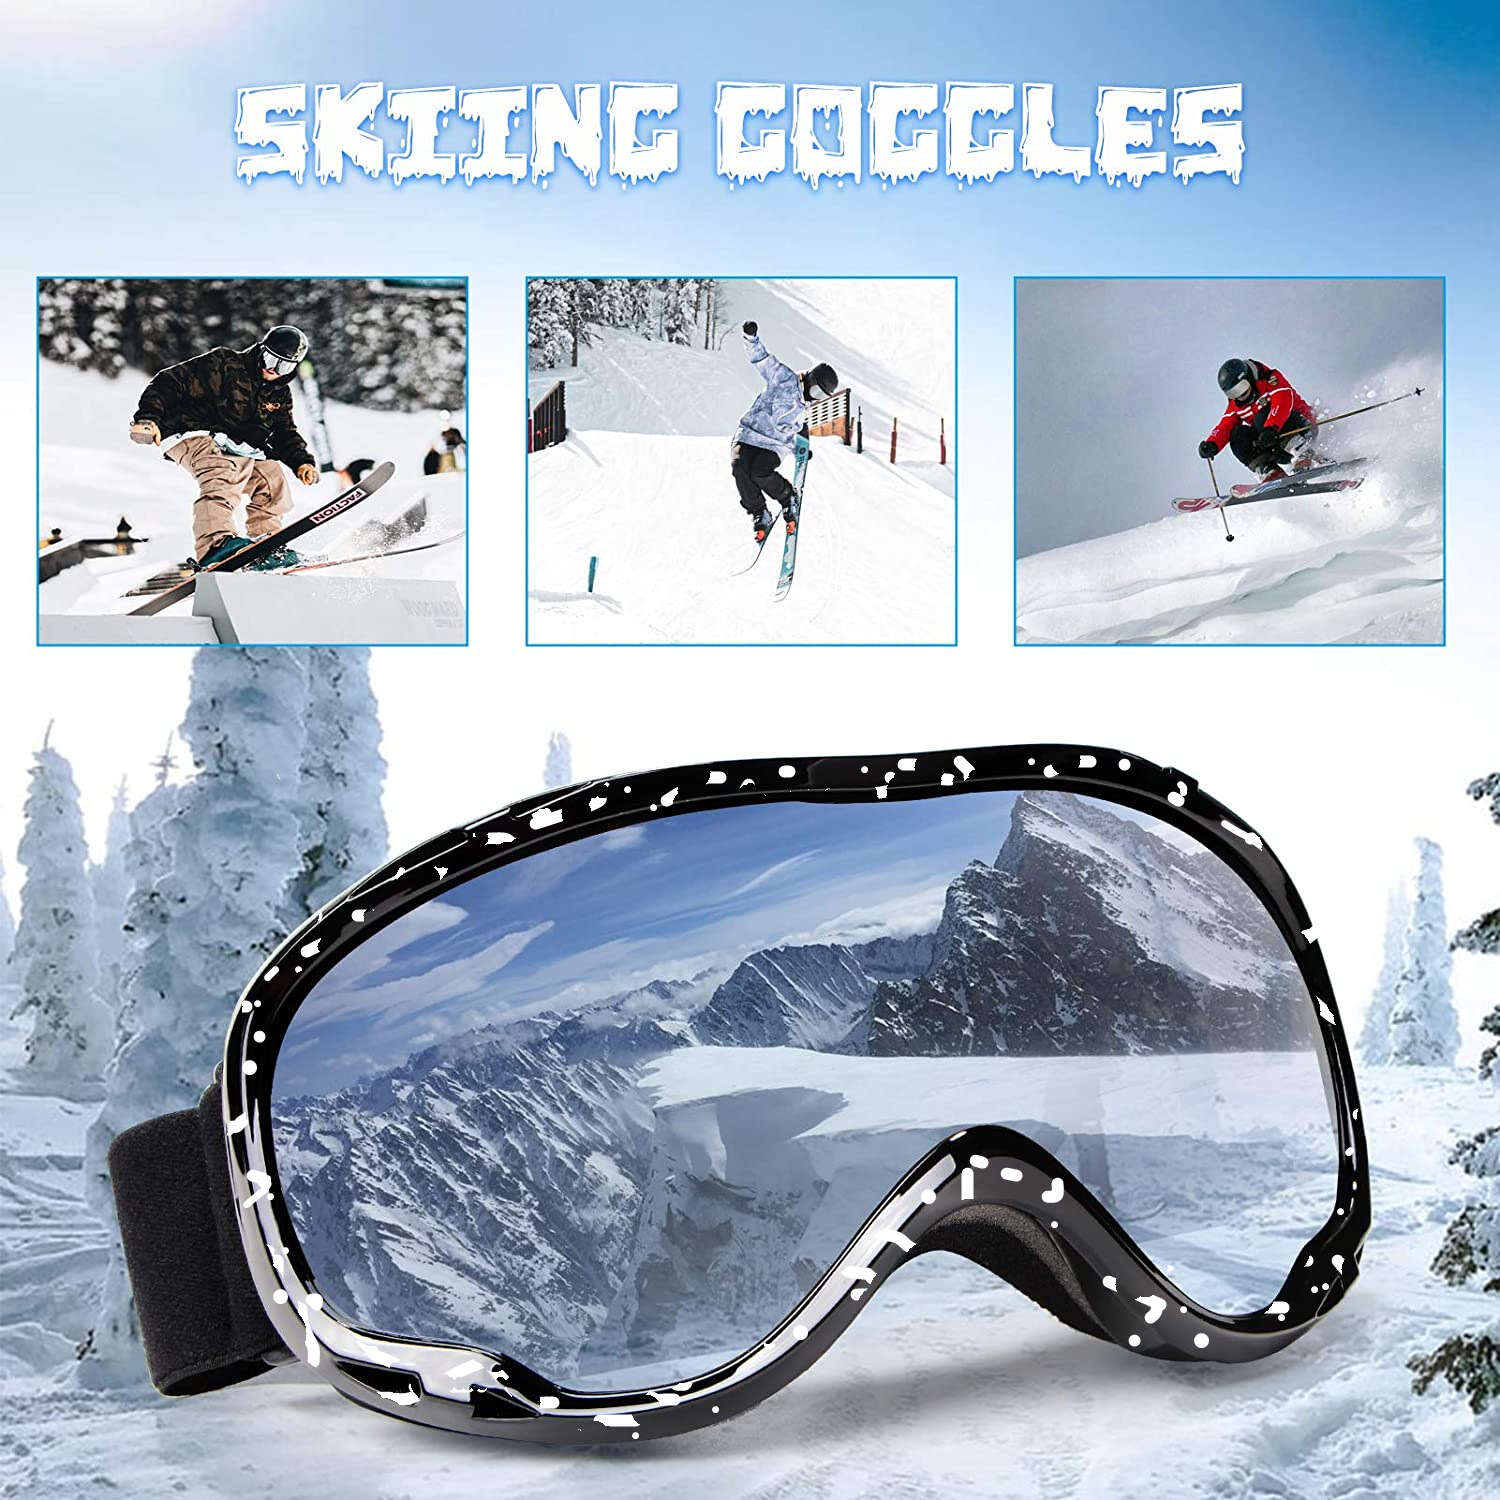 Dachuan Optical DRBHX20 China Supplier Fashion Oversize Anti Fog Ski Goggles with Optical Frame Adaptation (27)